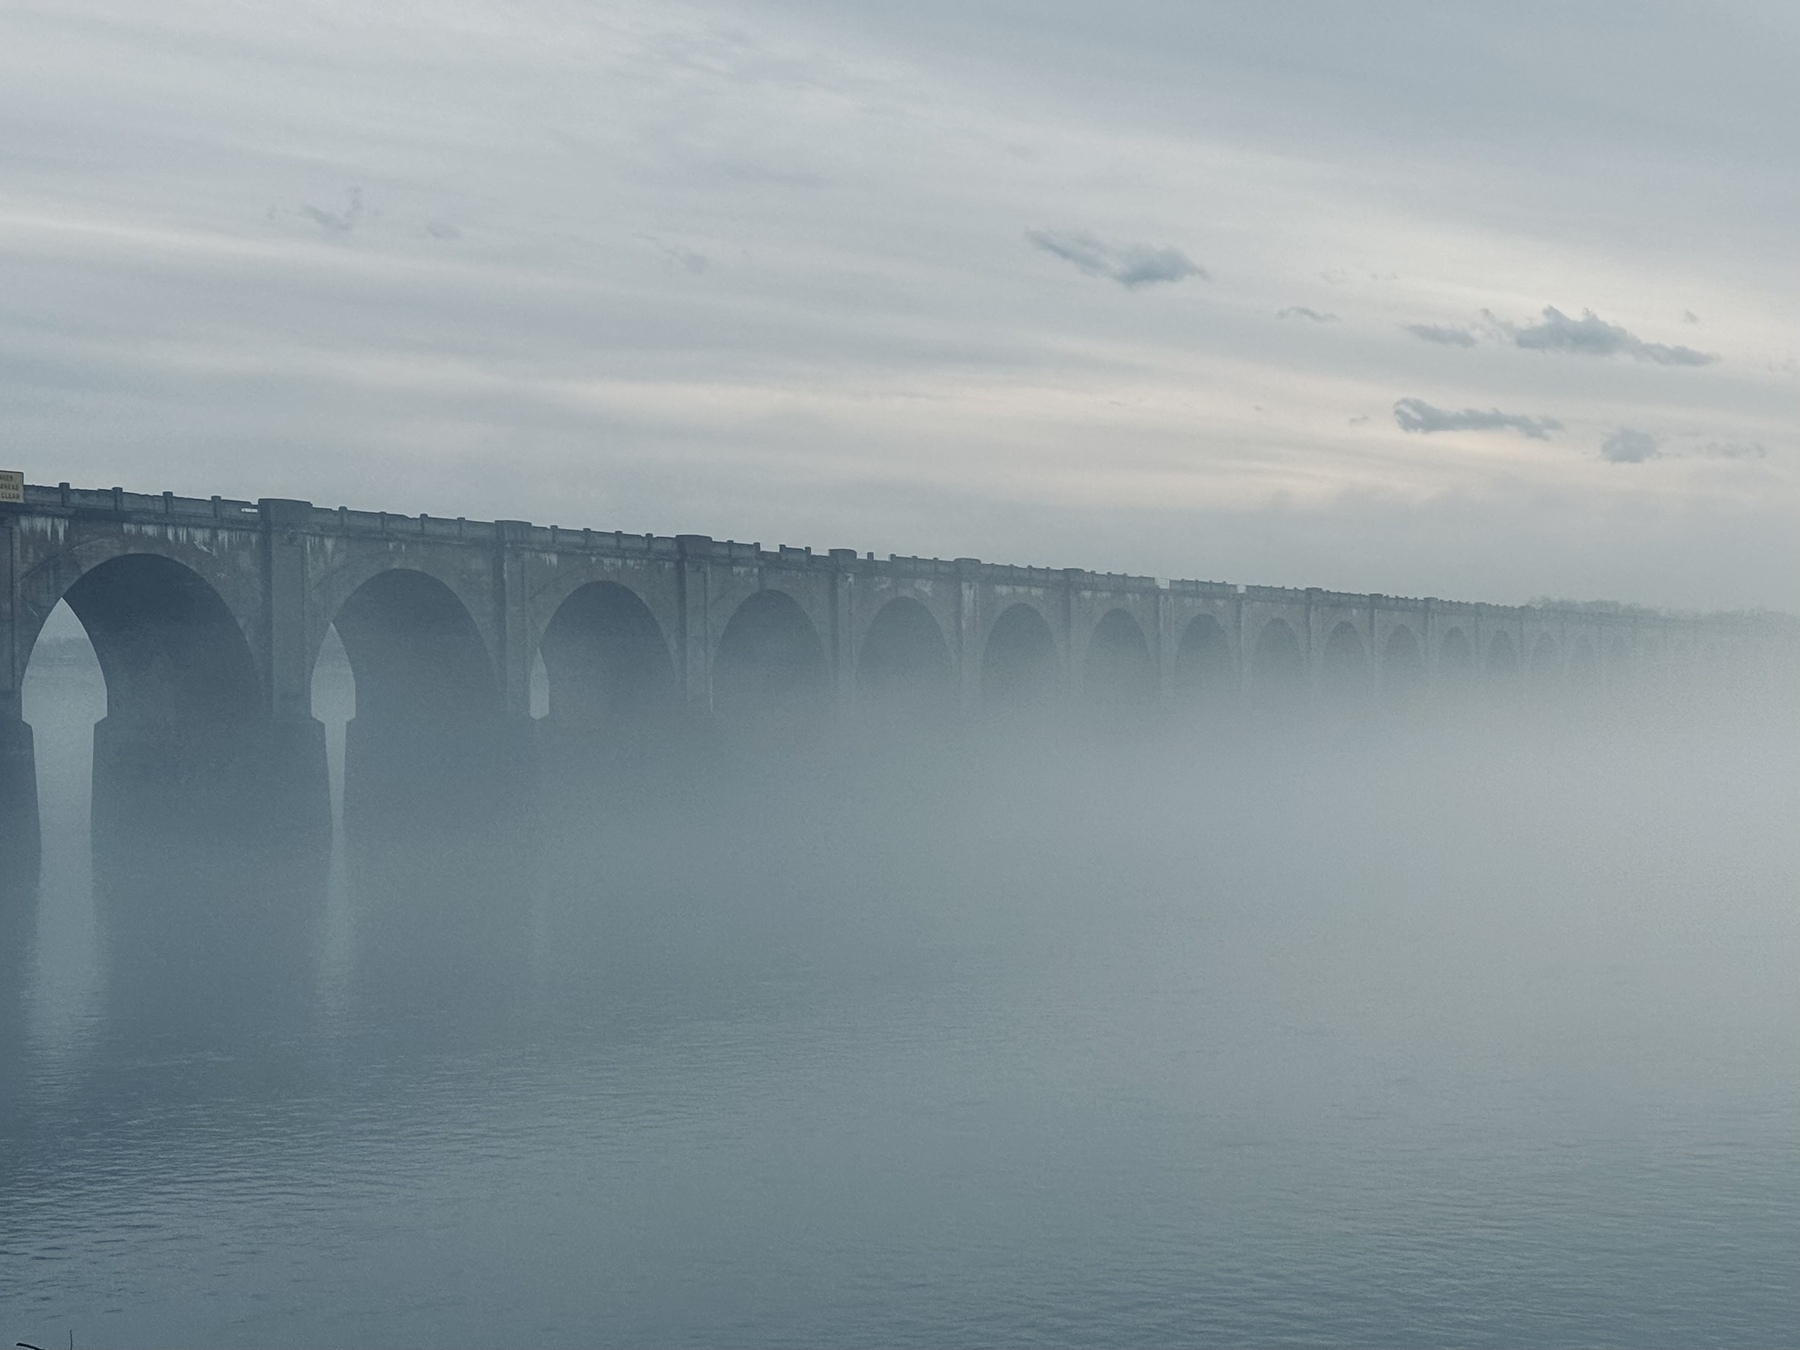 Fog over the Susquehanna river in Harrisburg Pennsylvania. A train bridge disappearing into the fog. 